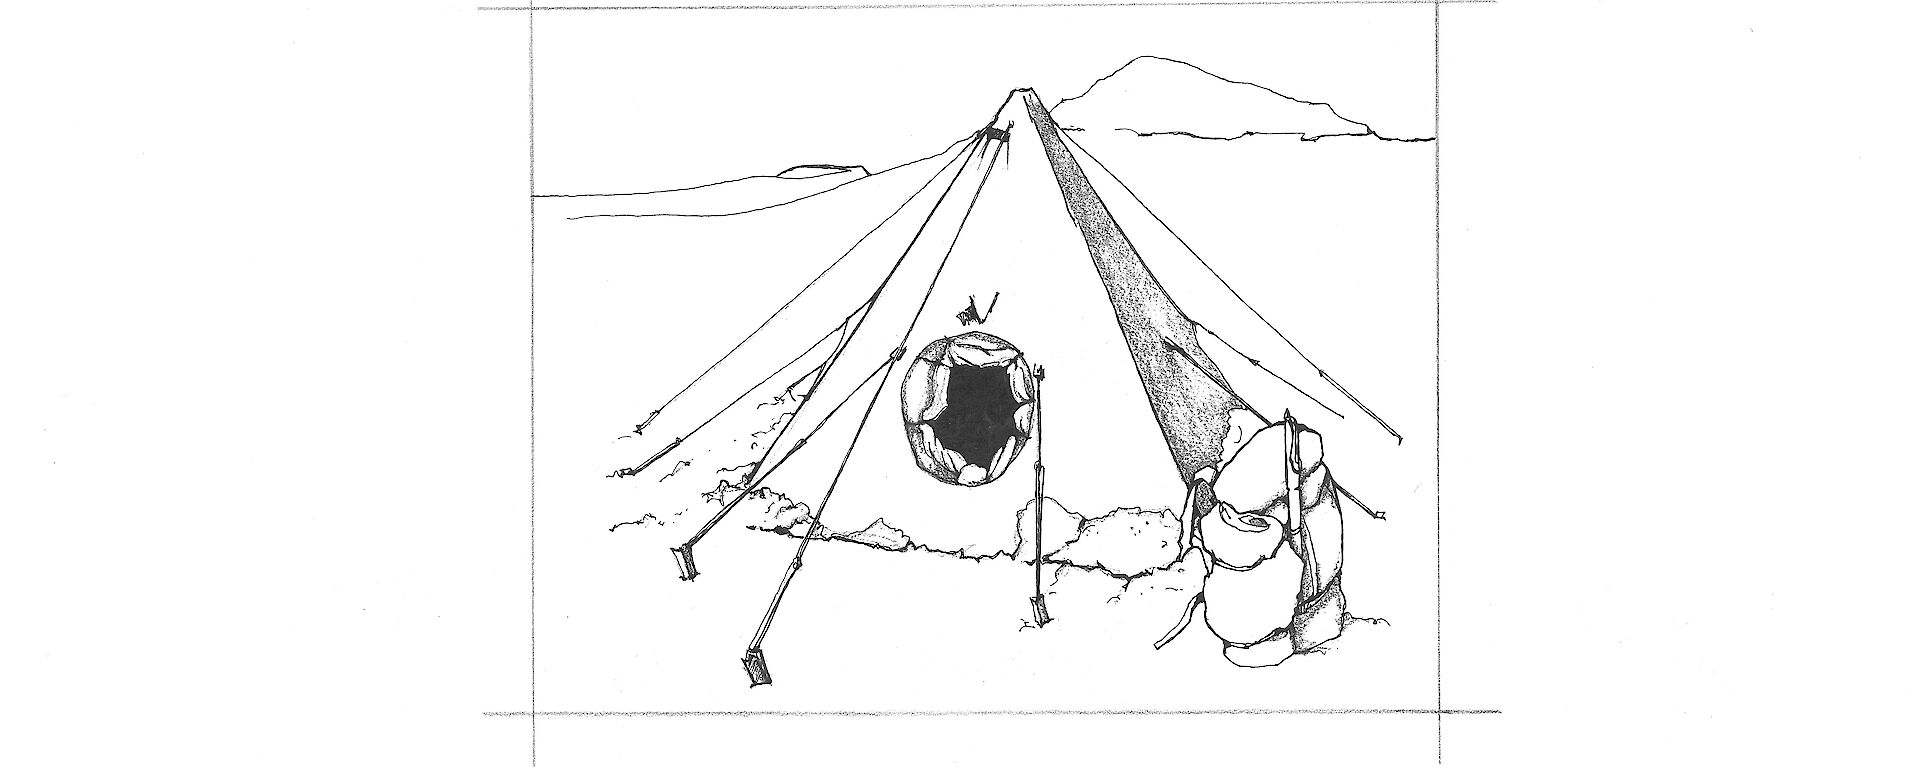 Sketch of a tent